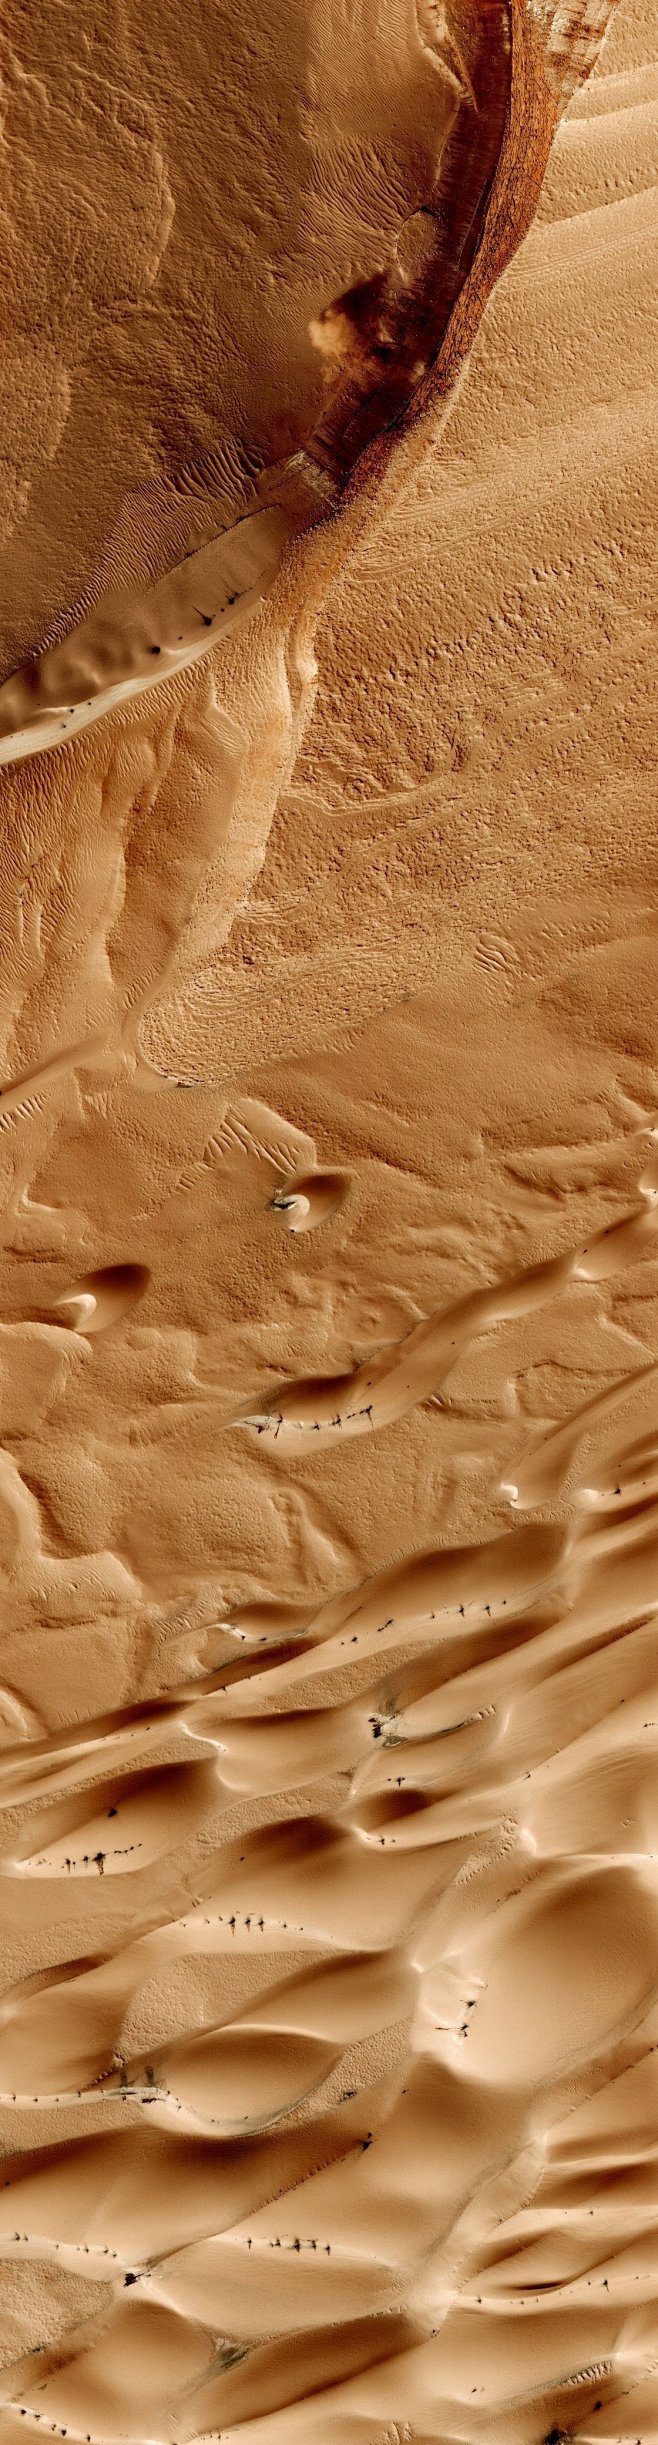 Martian plain from 2...